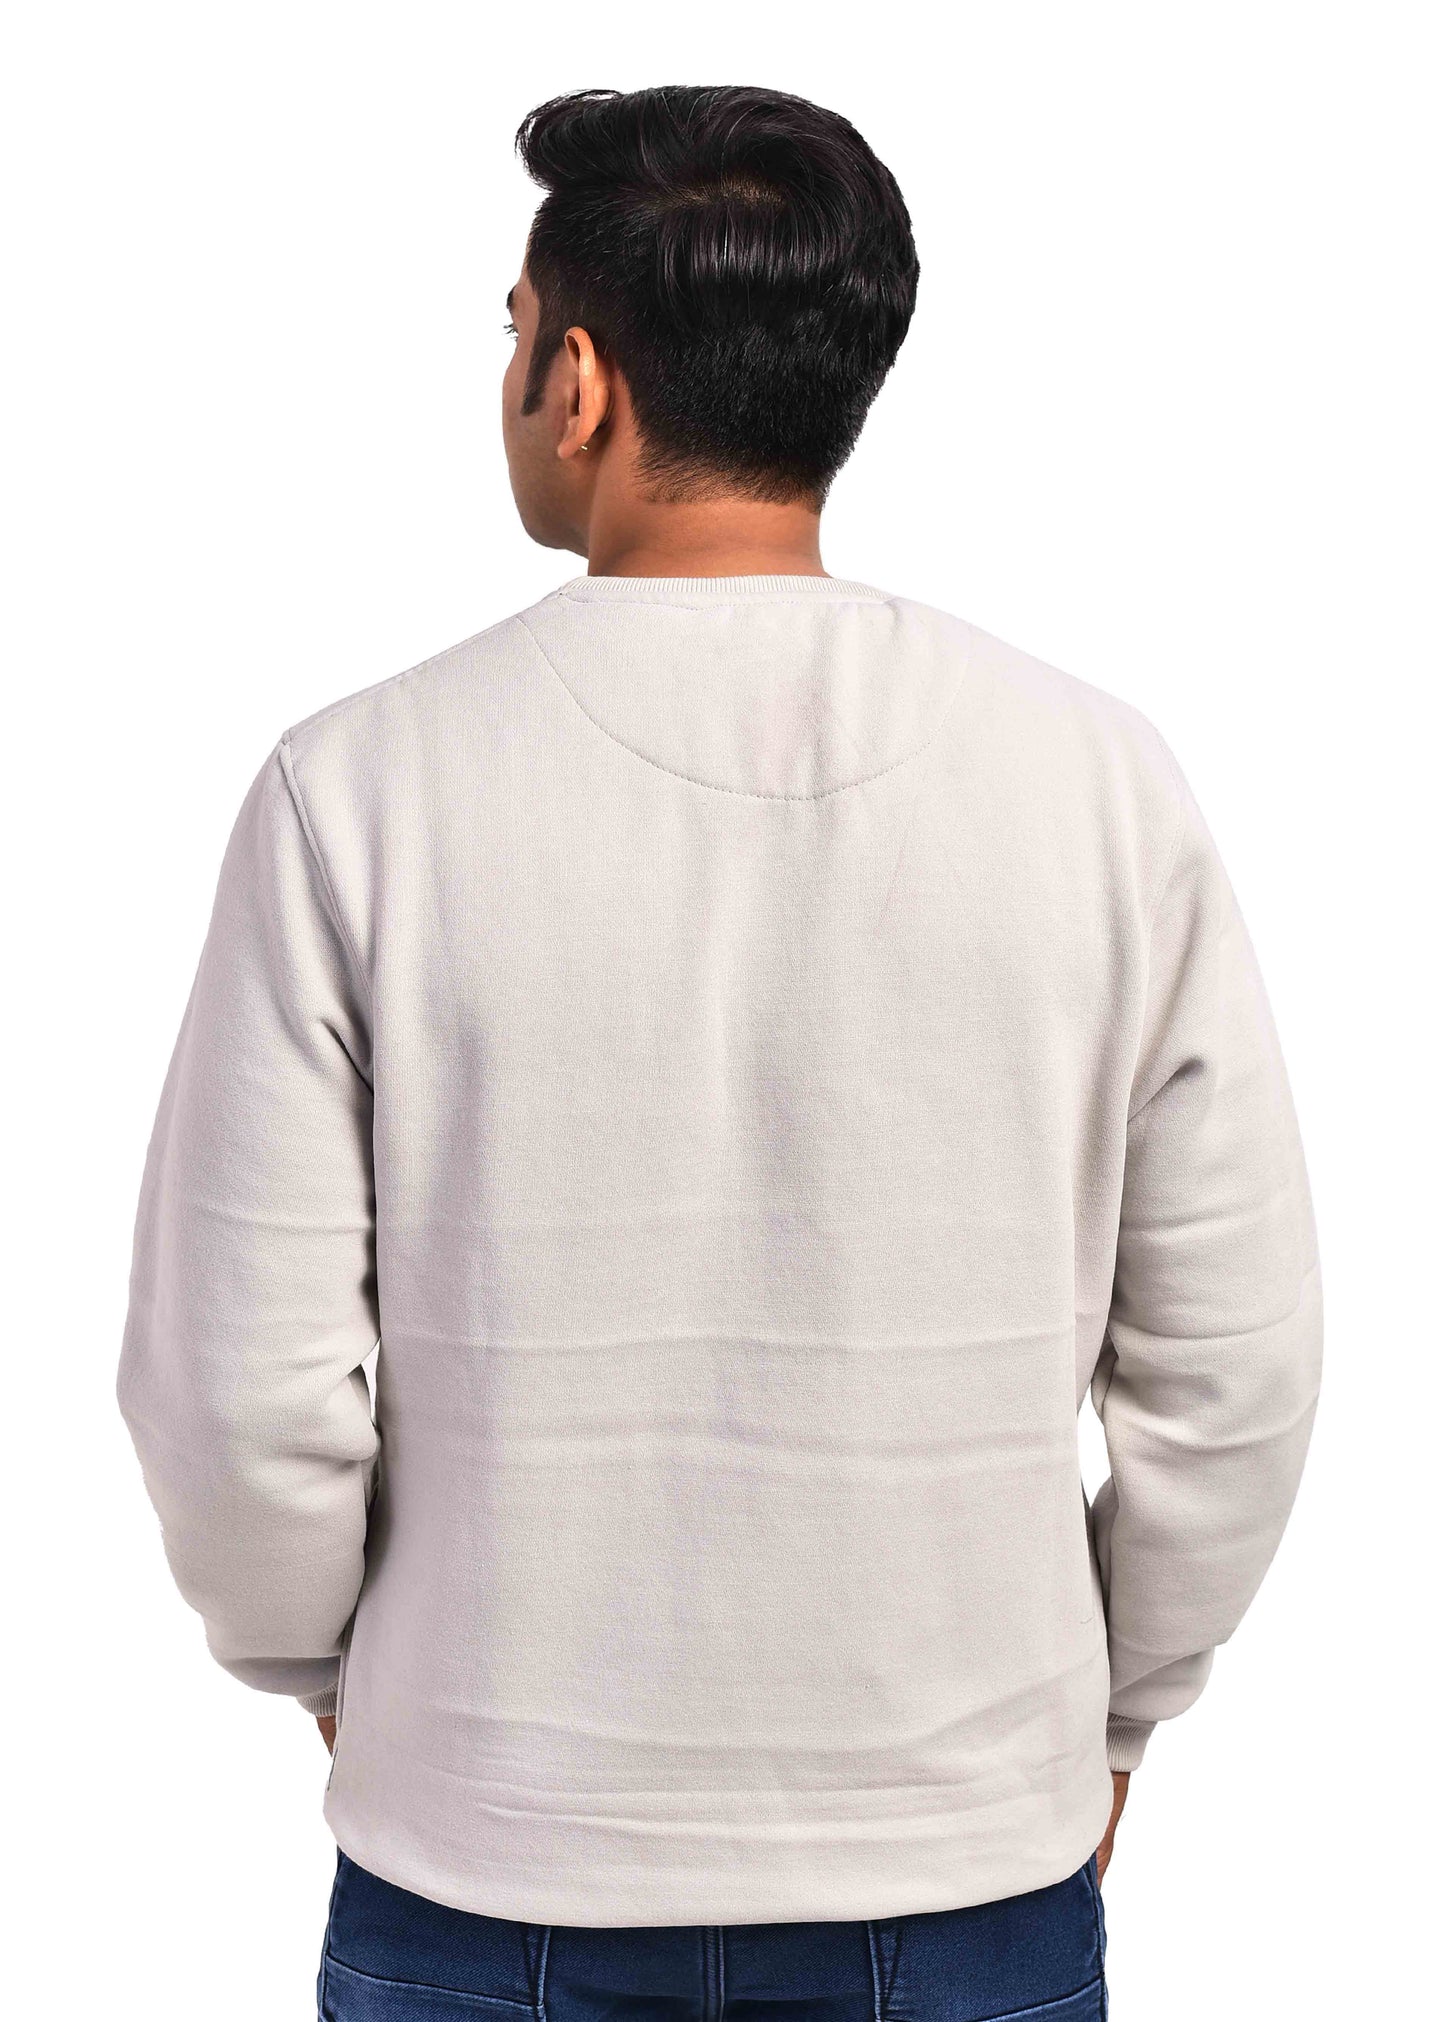 Men's Casual Grey Cotton sweatshirt full sleeve